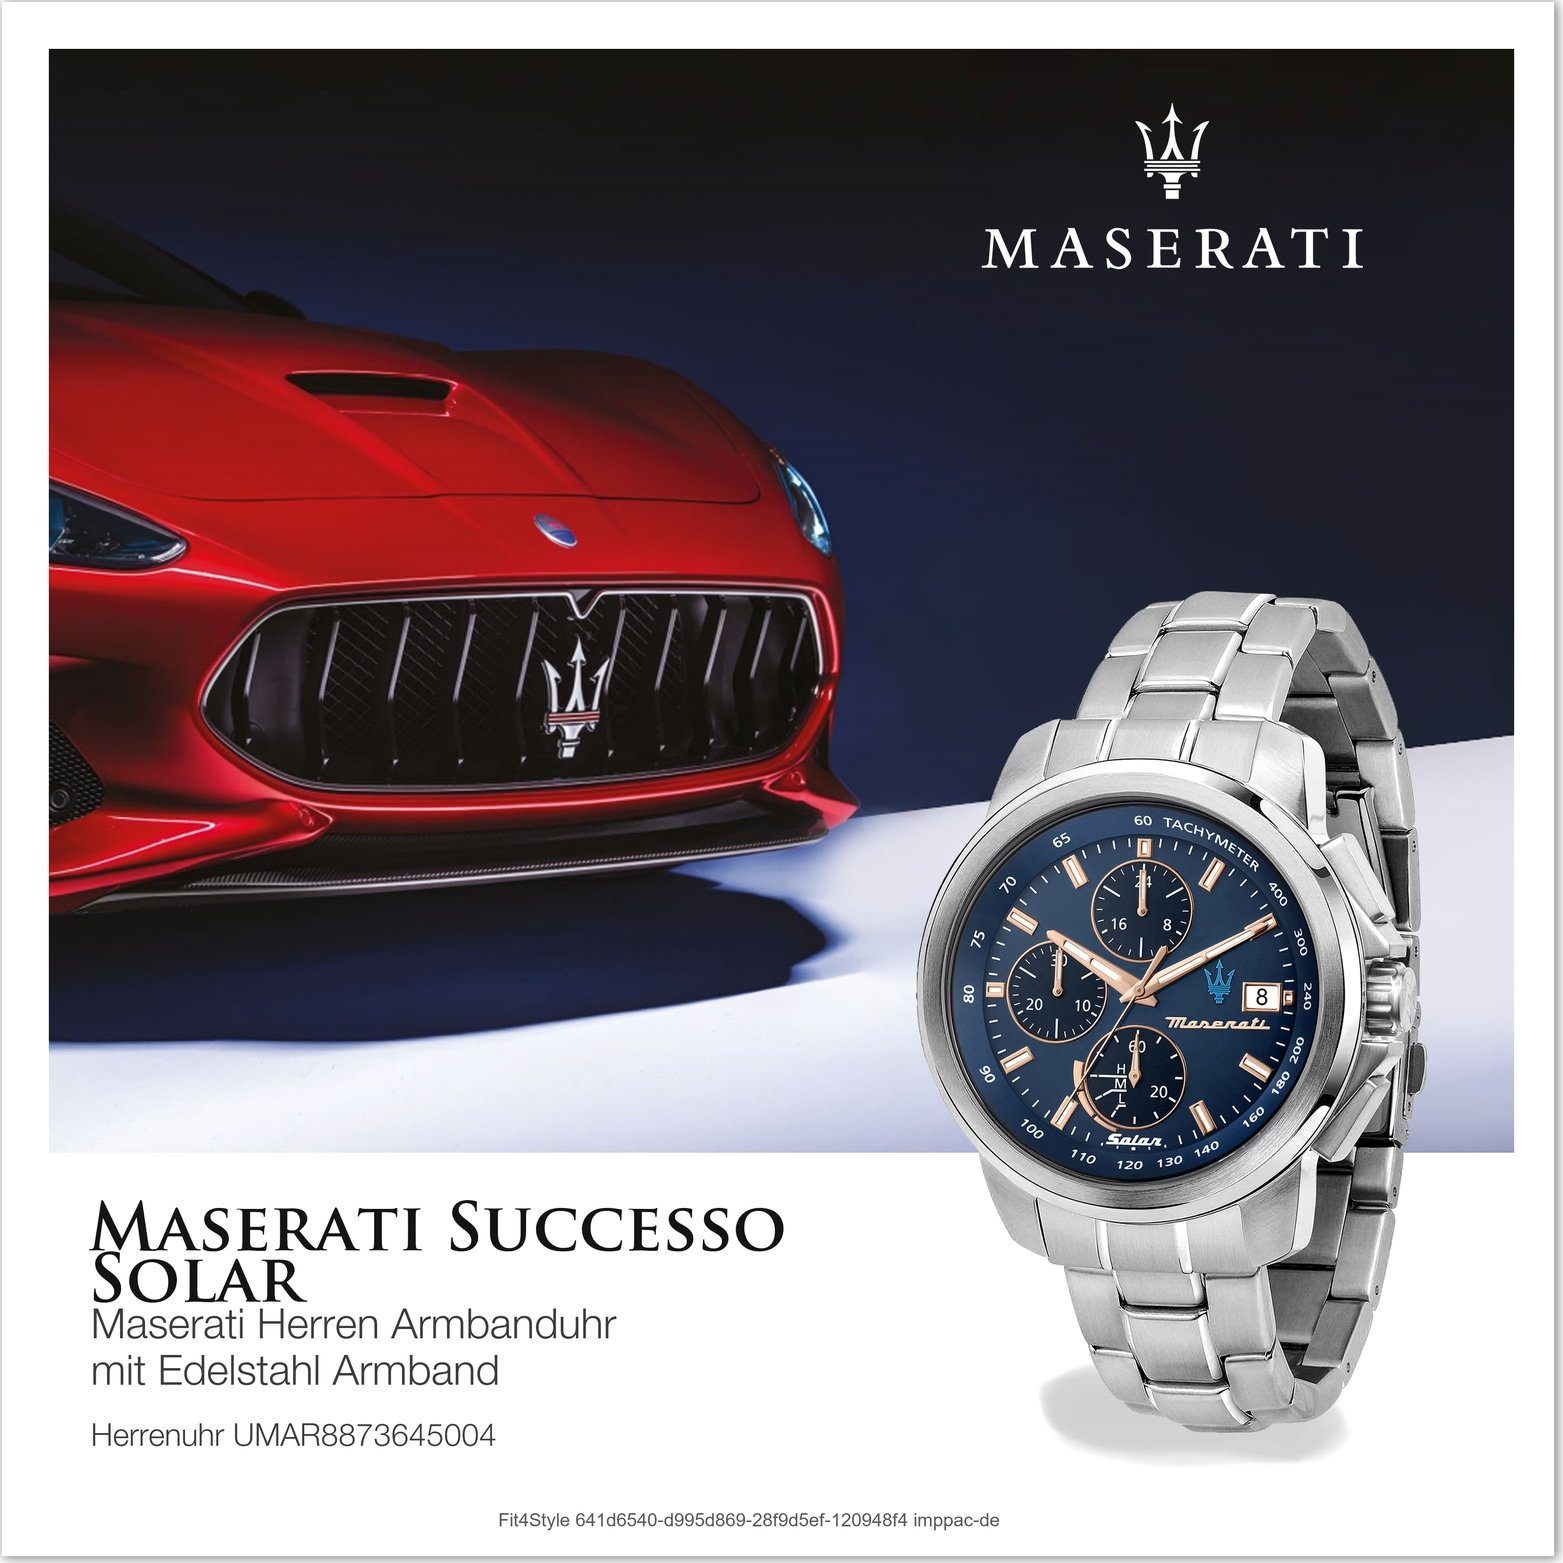 44mm) Chronograph, Maserati rundes Herrenuhr Gehäuse, MASERATI (ca. groß Chronograph Edelstahlarmband, Edelstahl blau